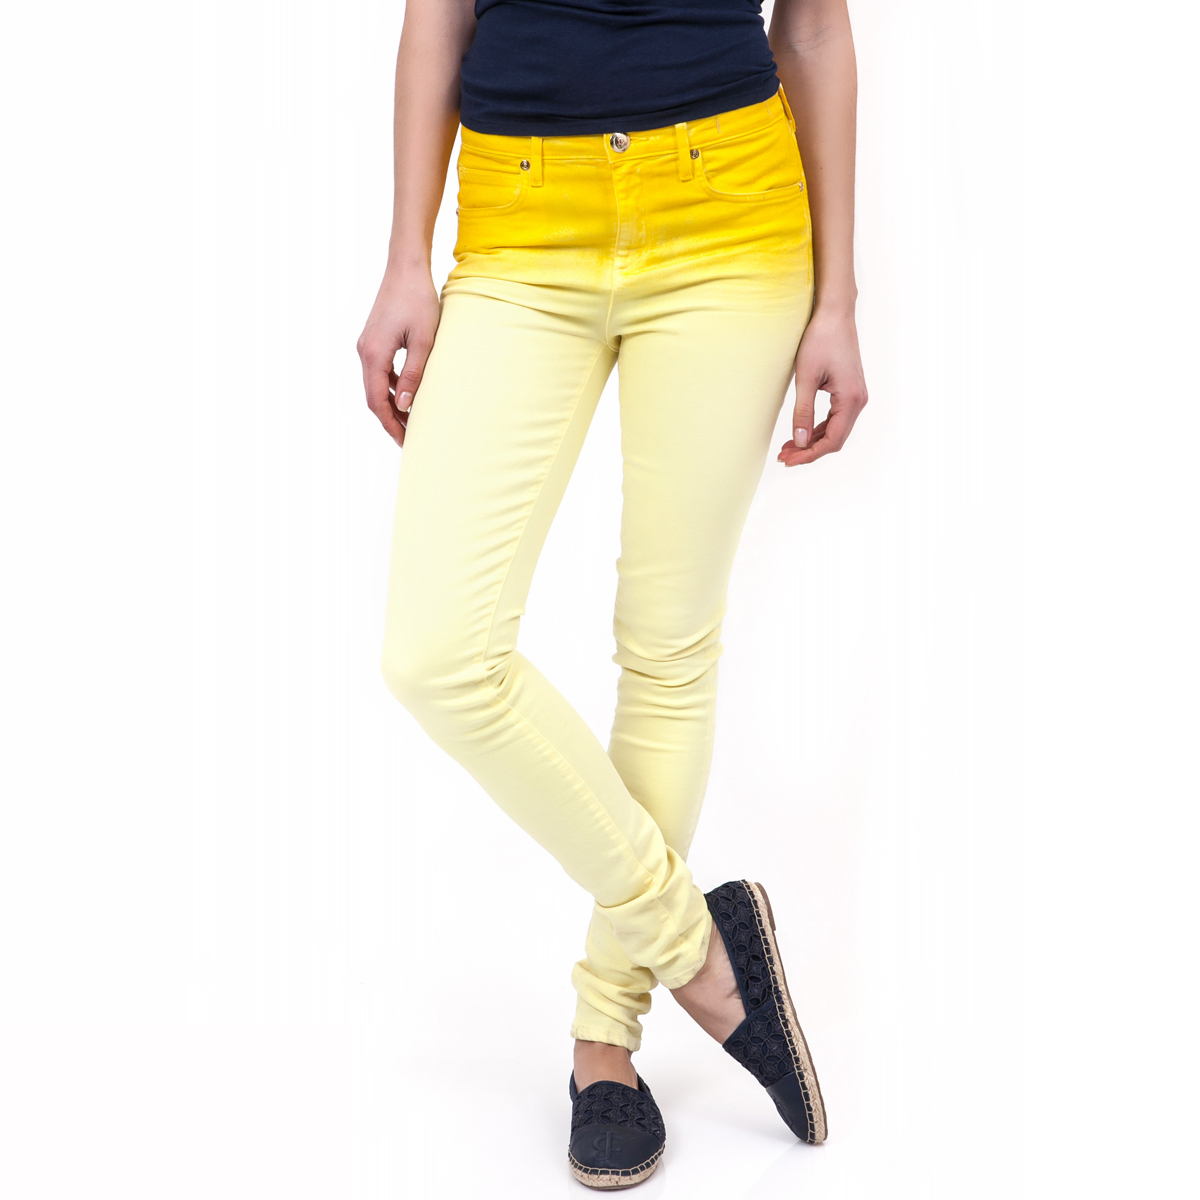 JUICY COUTURE - Γυναικείο παντελόνι Juicy Couture κίτρινο Γυναικεία/Ρούχα/Παντελόνια/Skinny